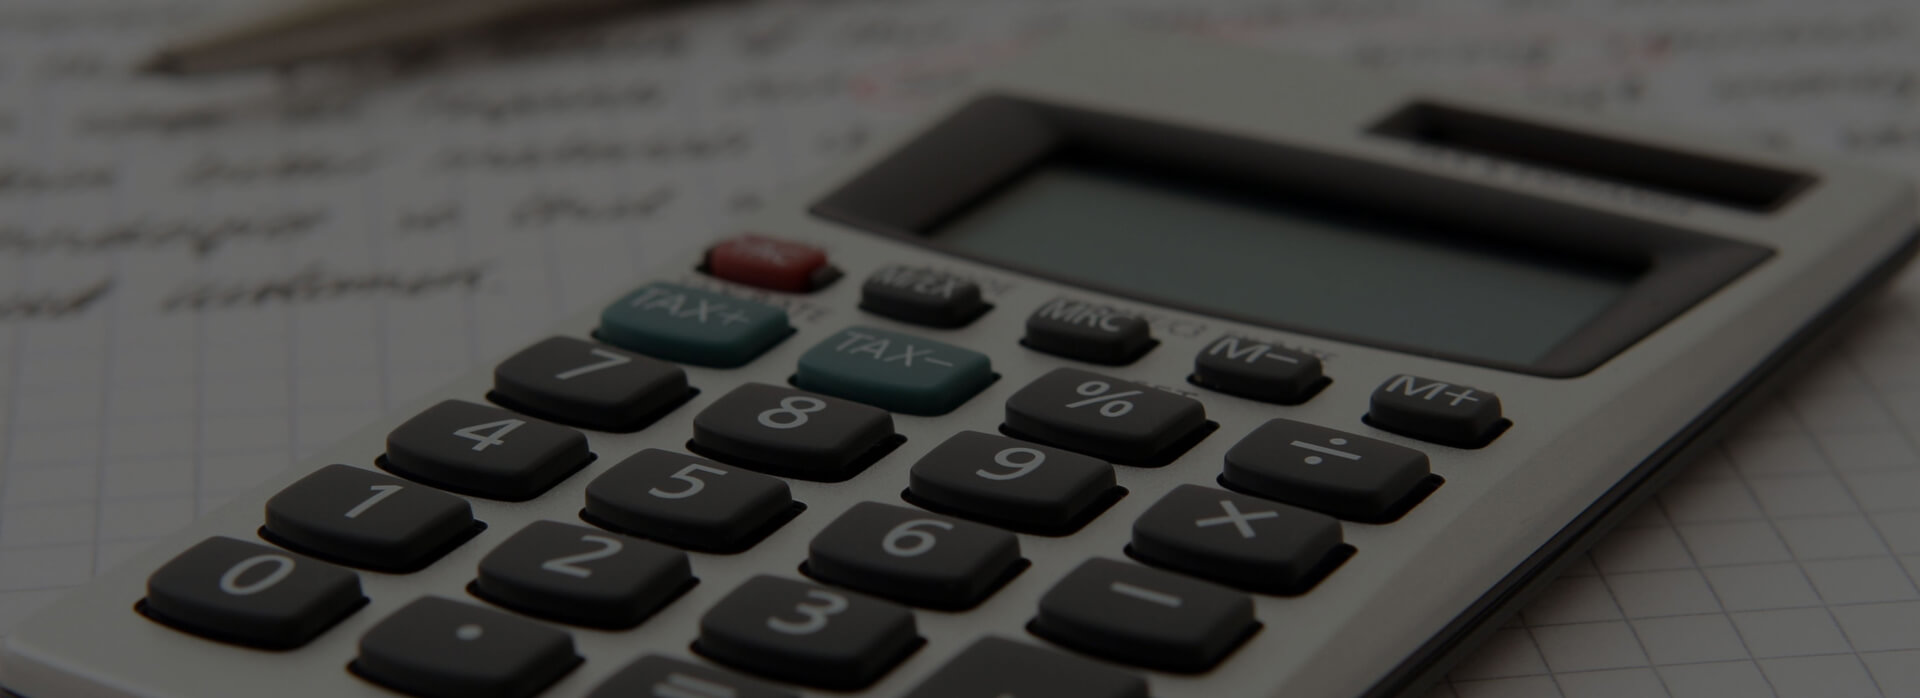 Advanced Tax Refund Calculator